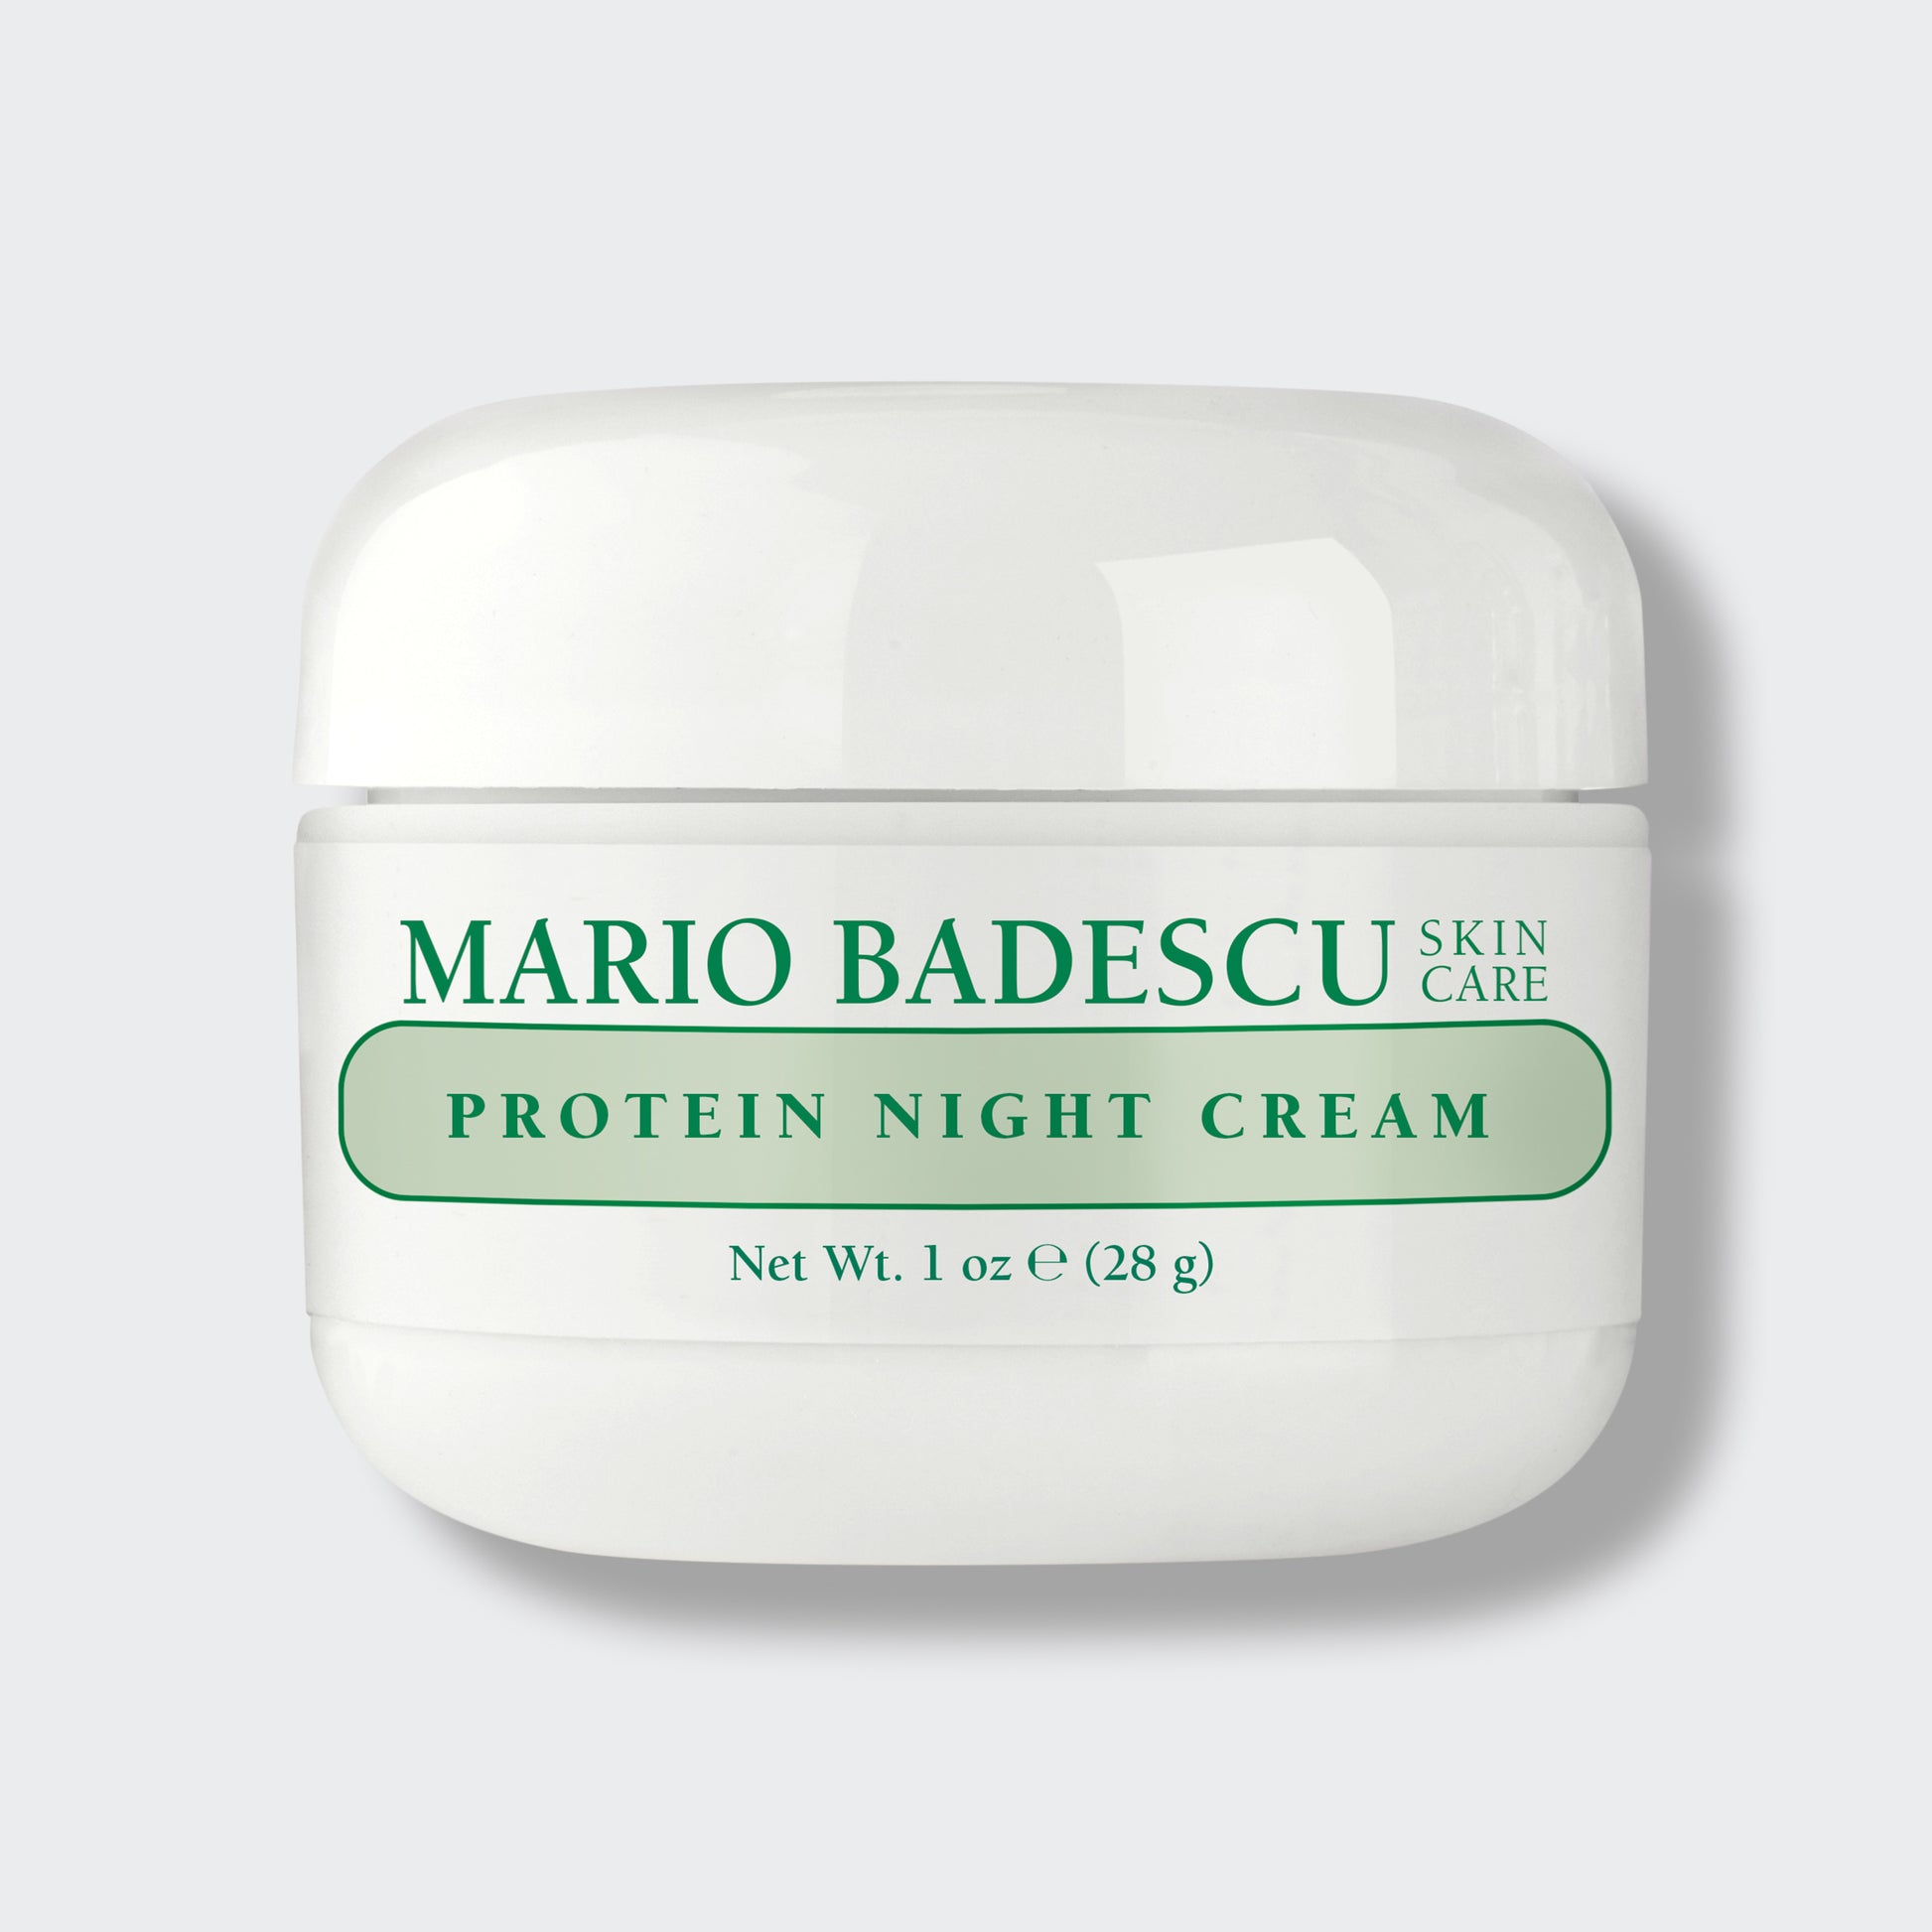  Mario Badescu Protein Night Cream